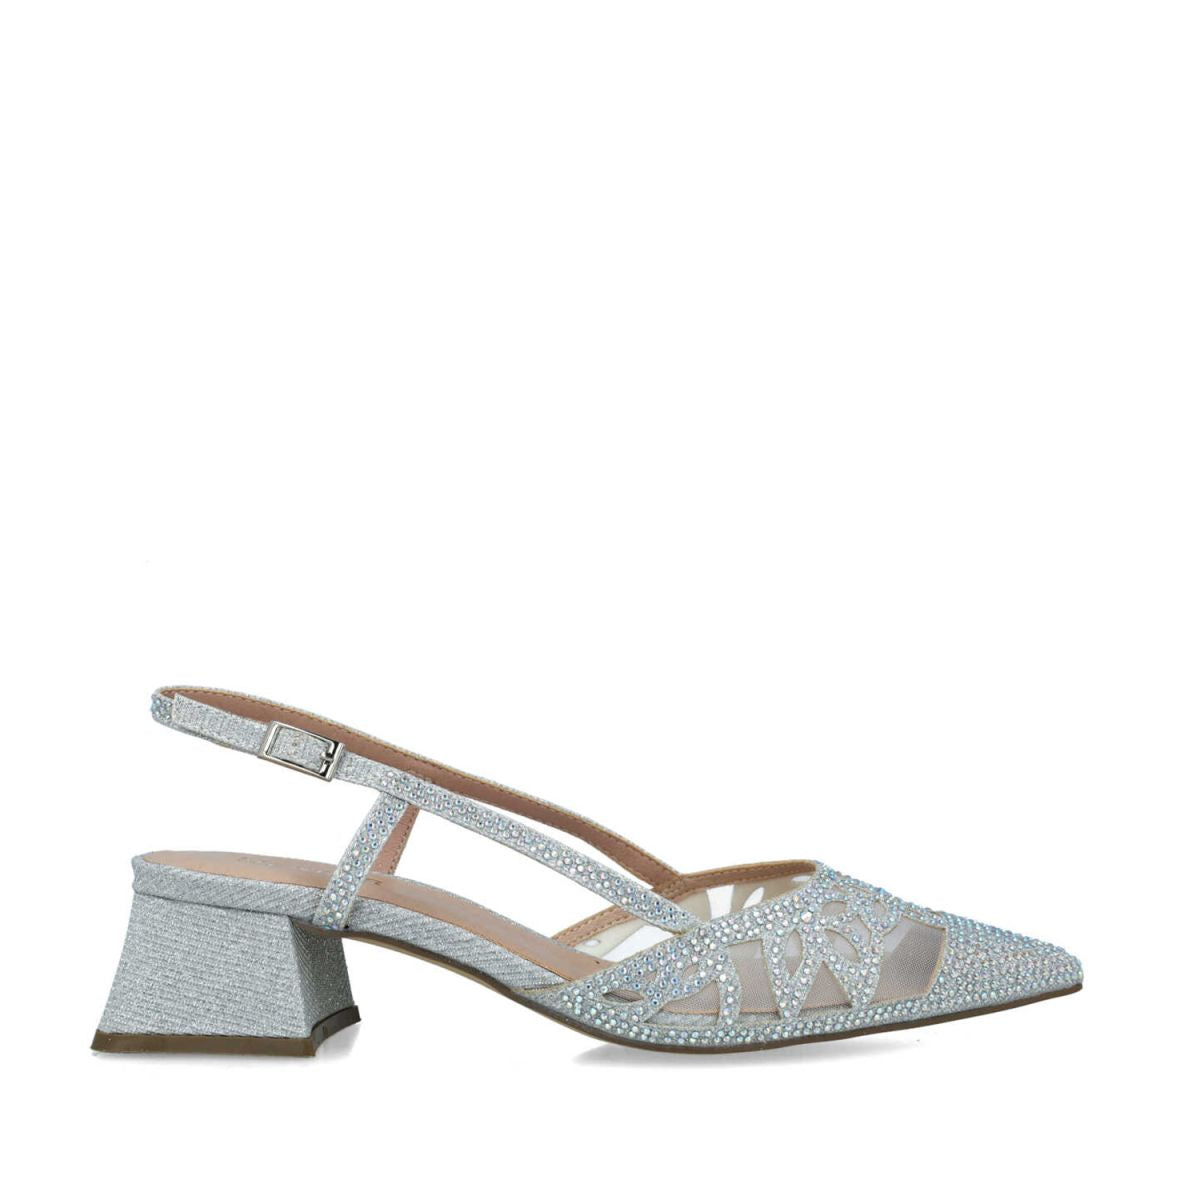 Main image of Stylish Silver Low Block Heel Sandal.